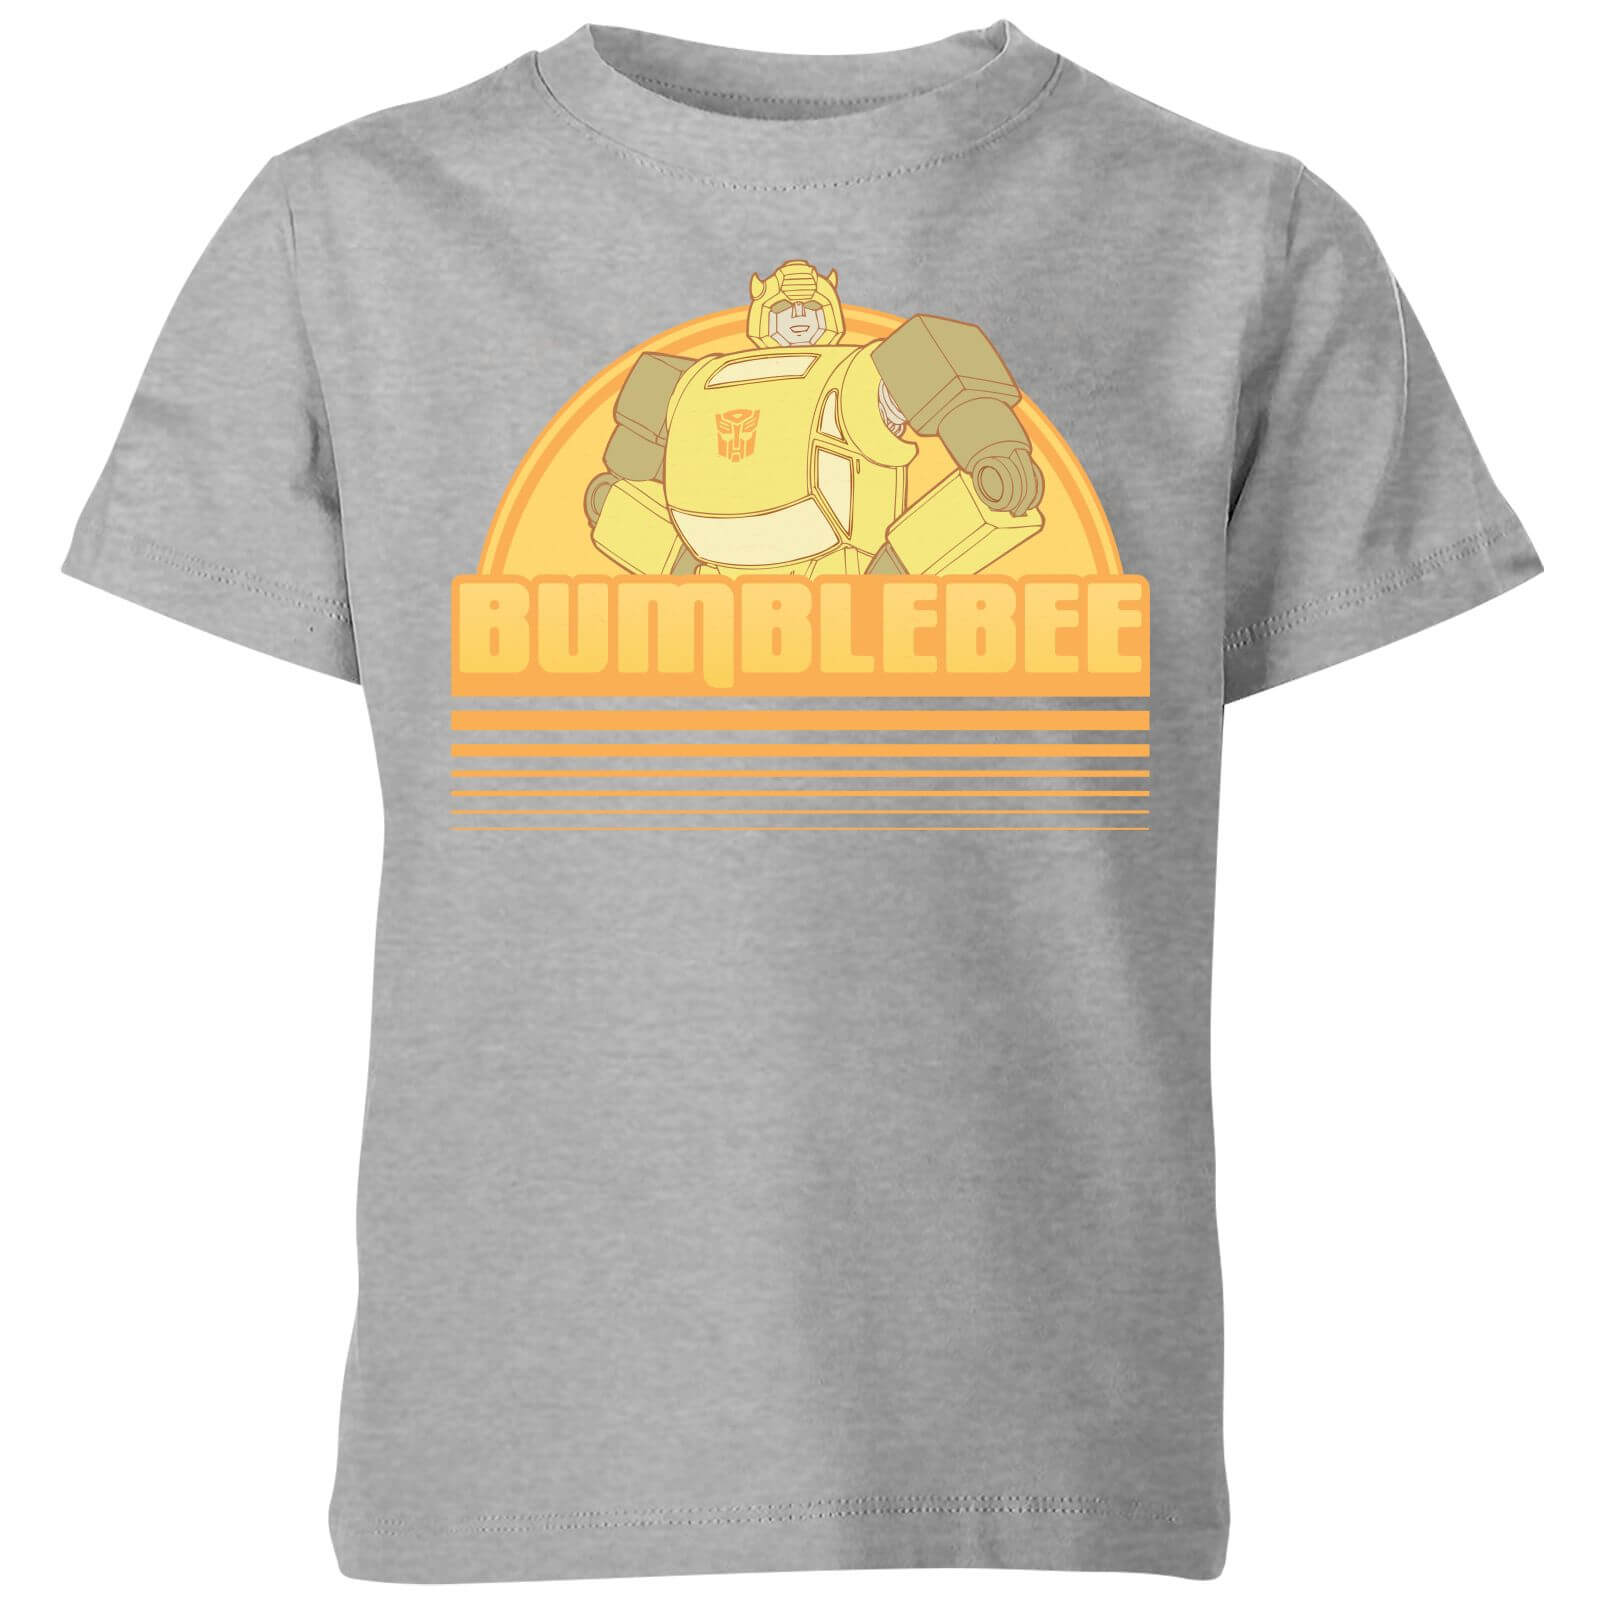 Transformers Bumblebee Kids' T-Shirt - Grey - 3-4 Years - Grey